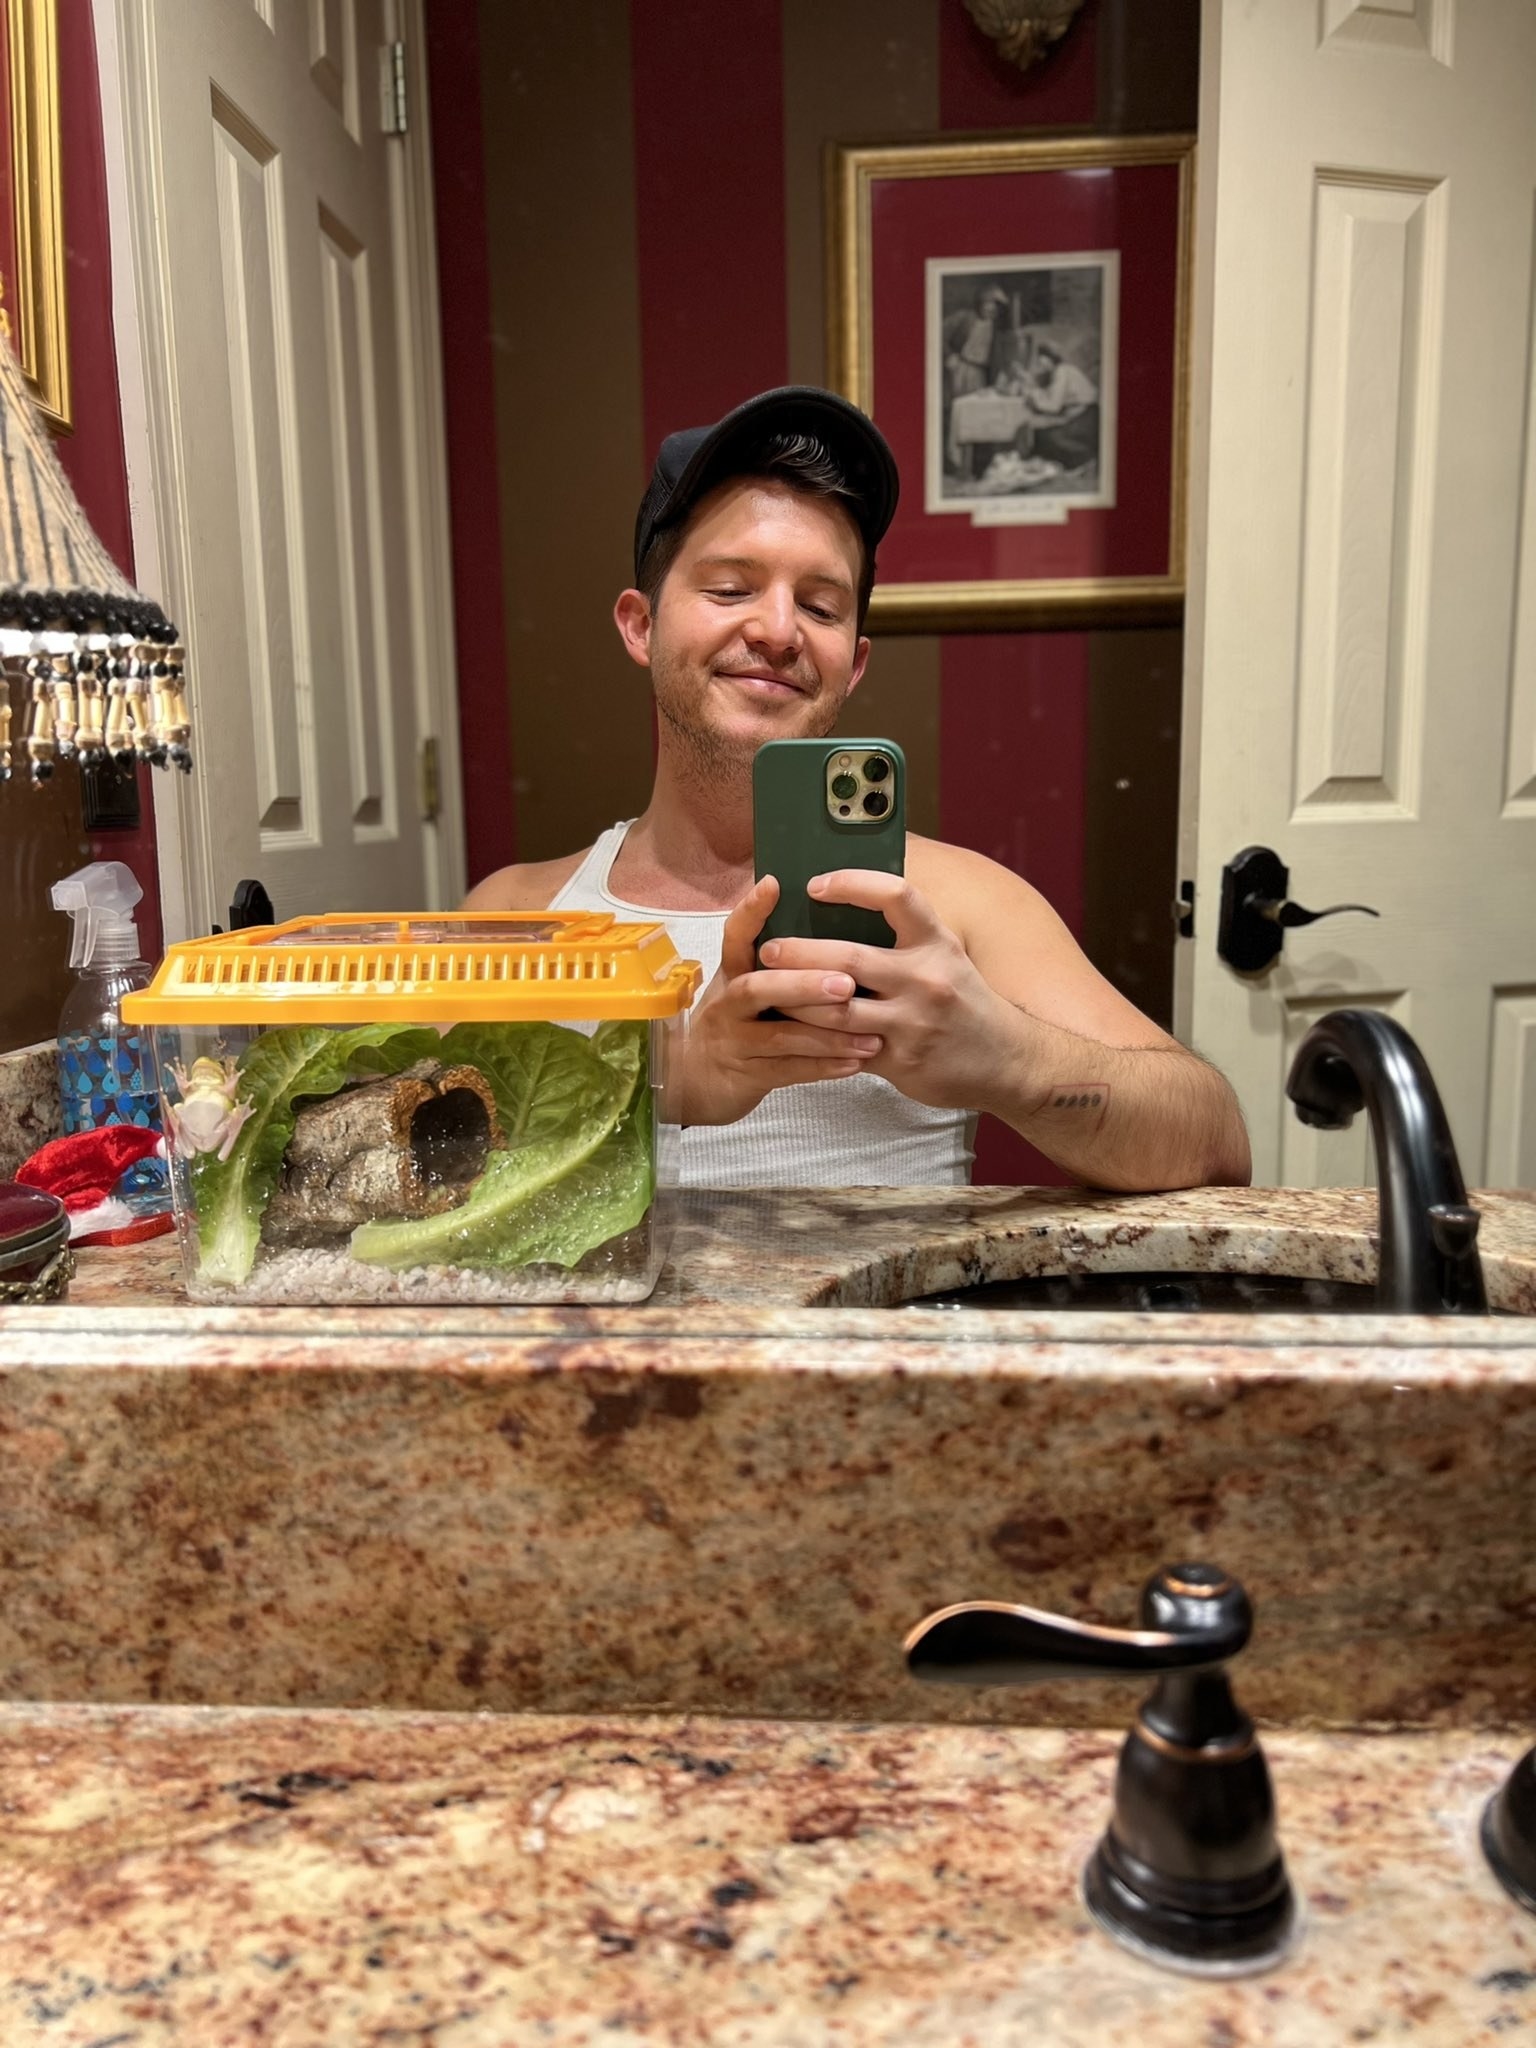 Simon wearing a baseball cap and taking a mirror selfie